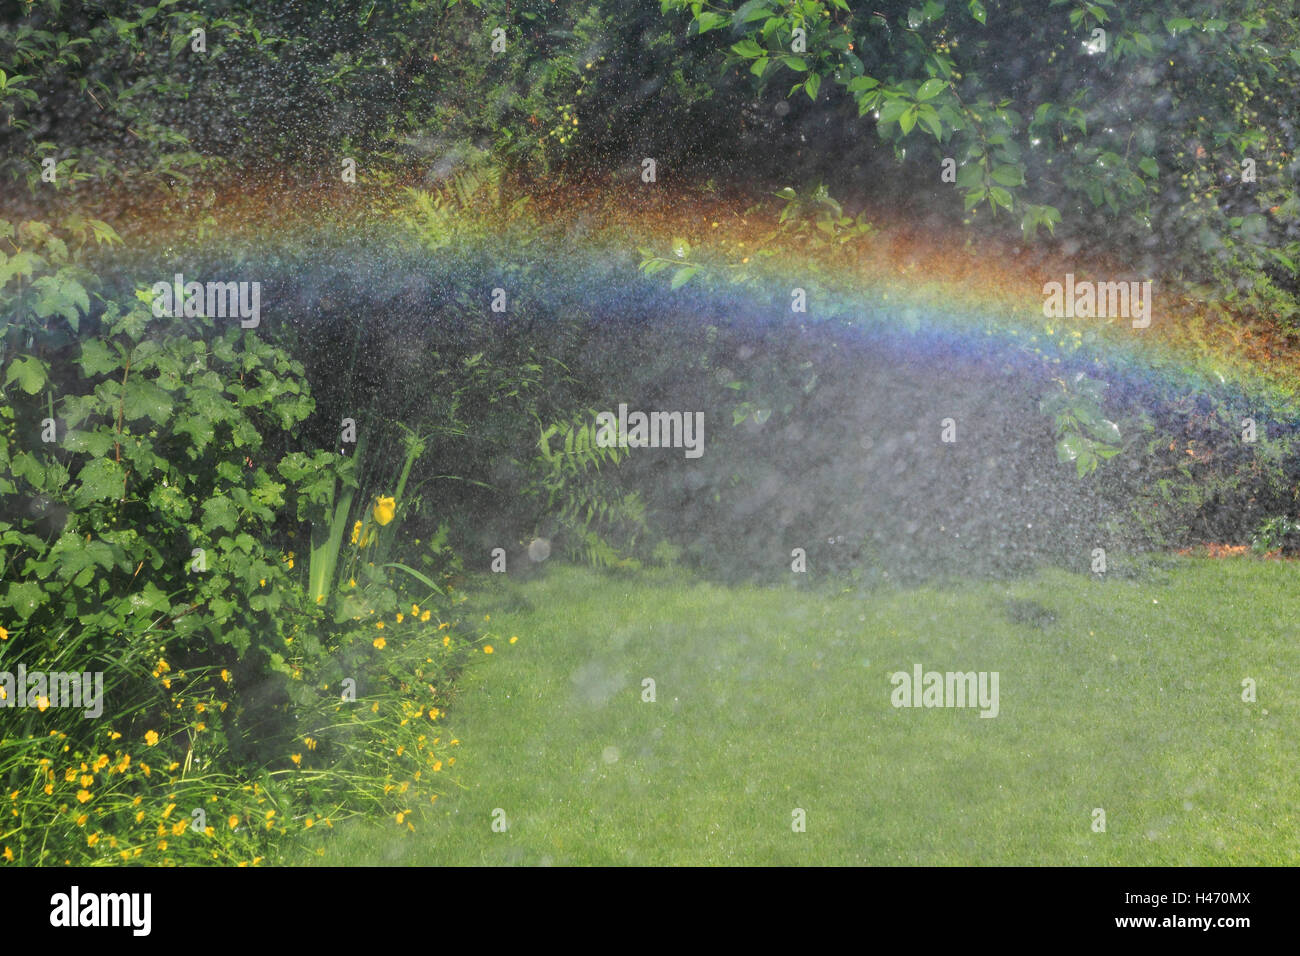 Rainbows in the garden, Stock Photo